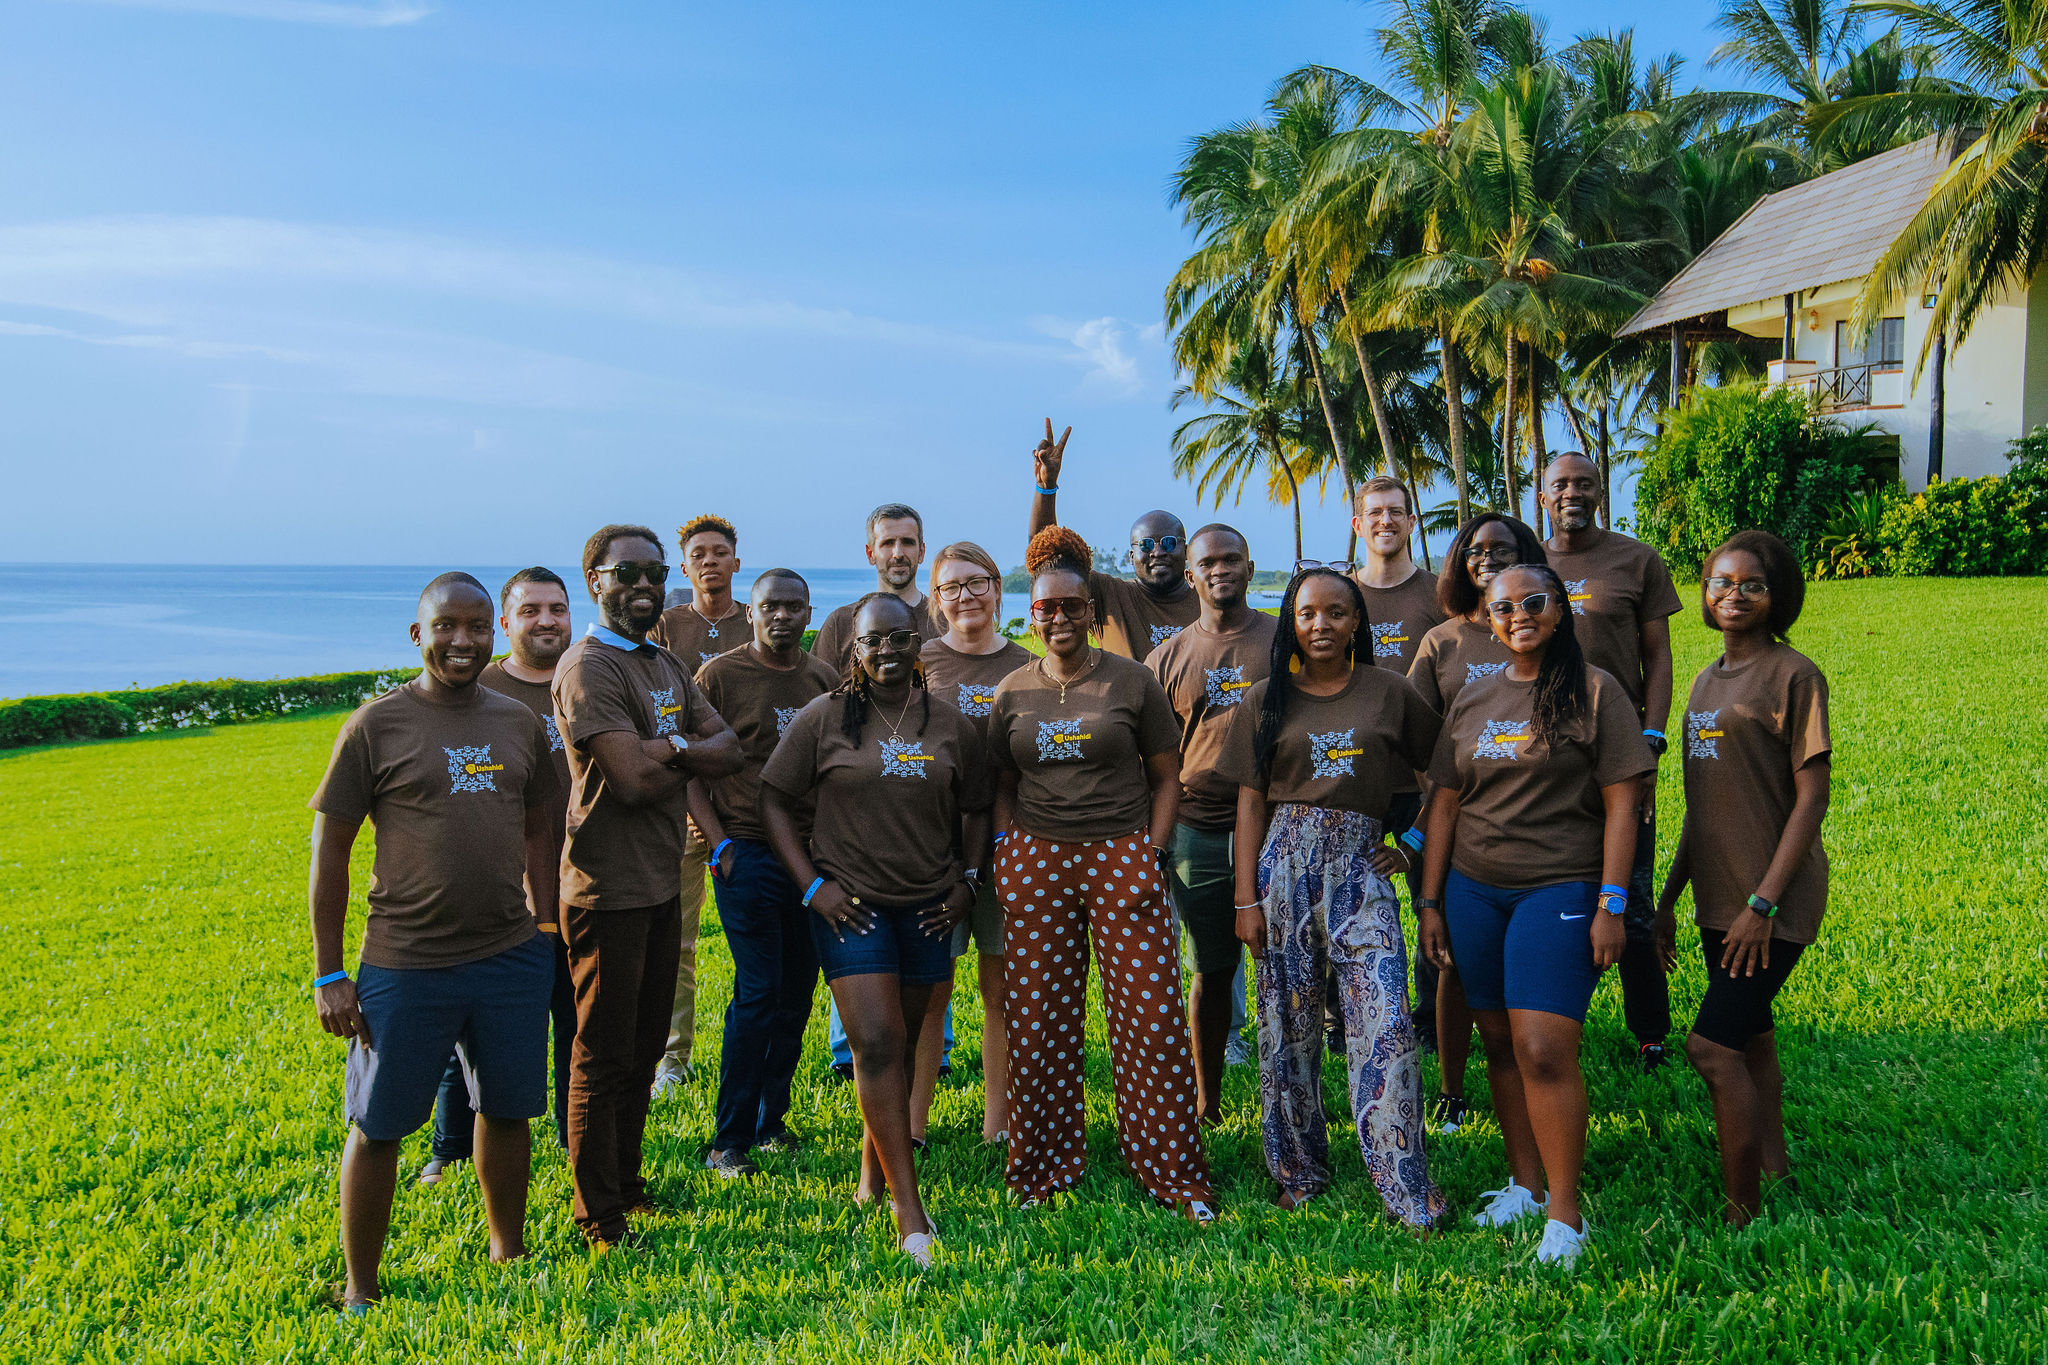 The Ushahidi Team standing together